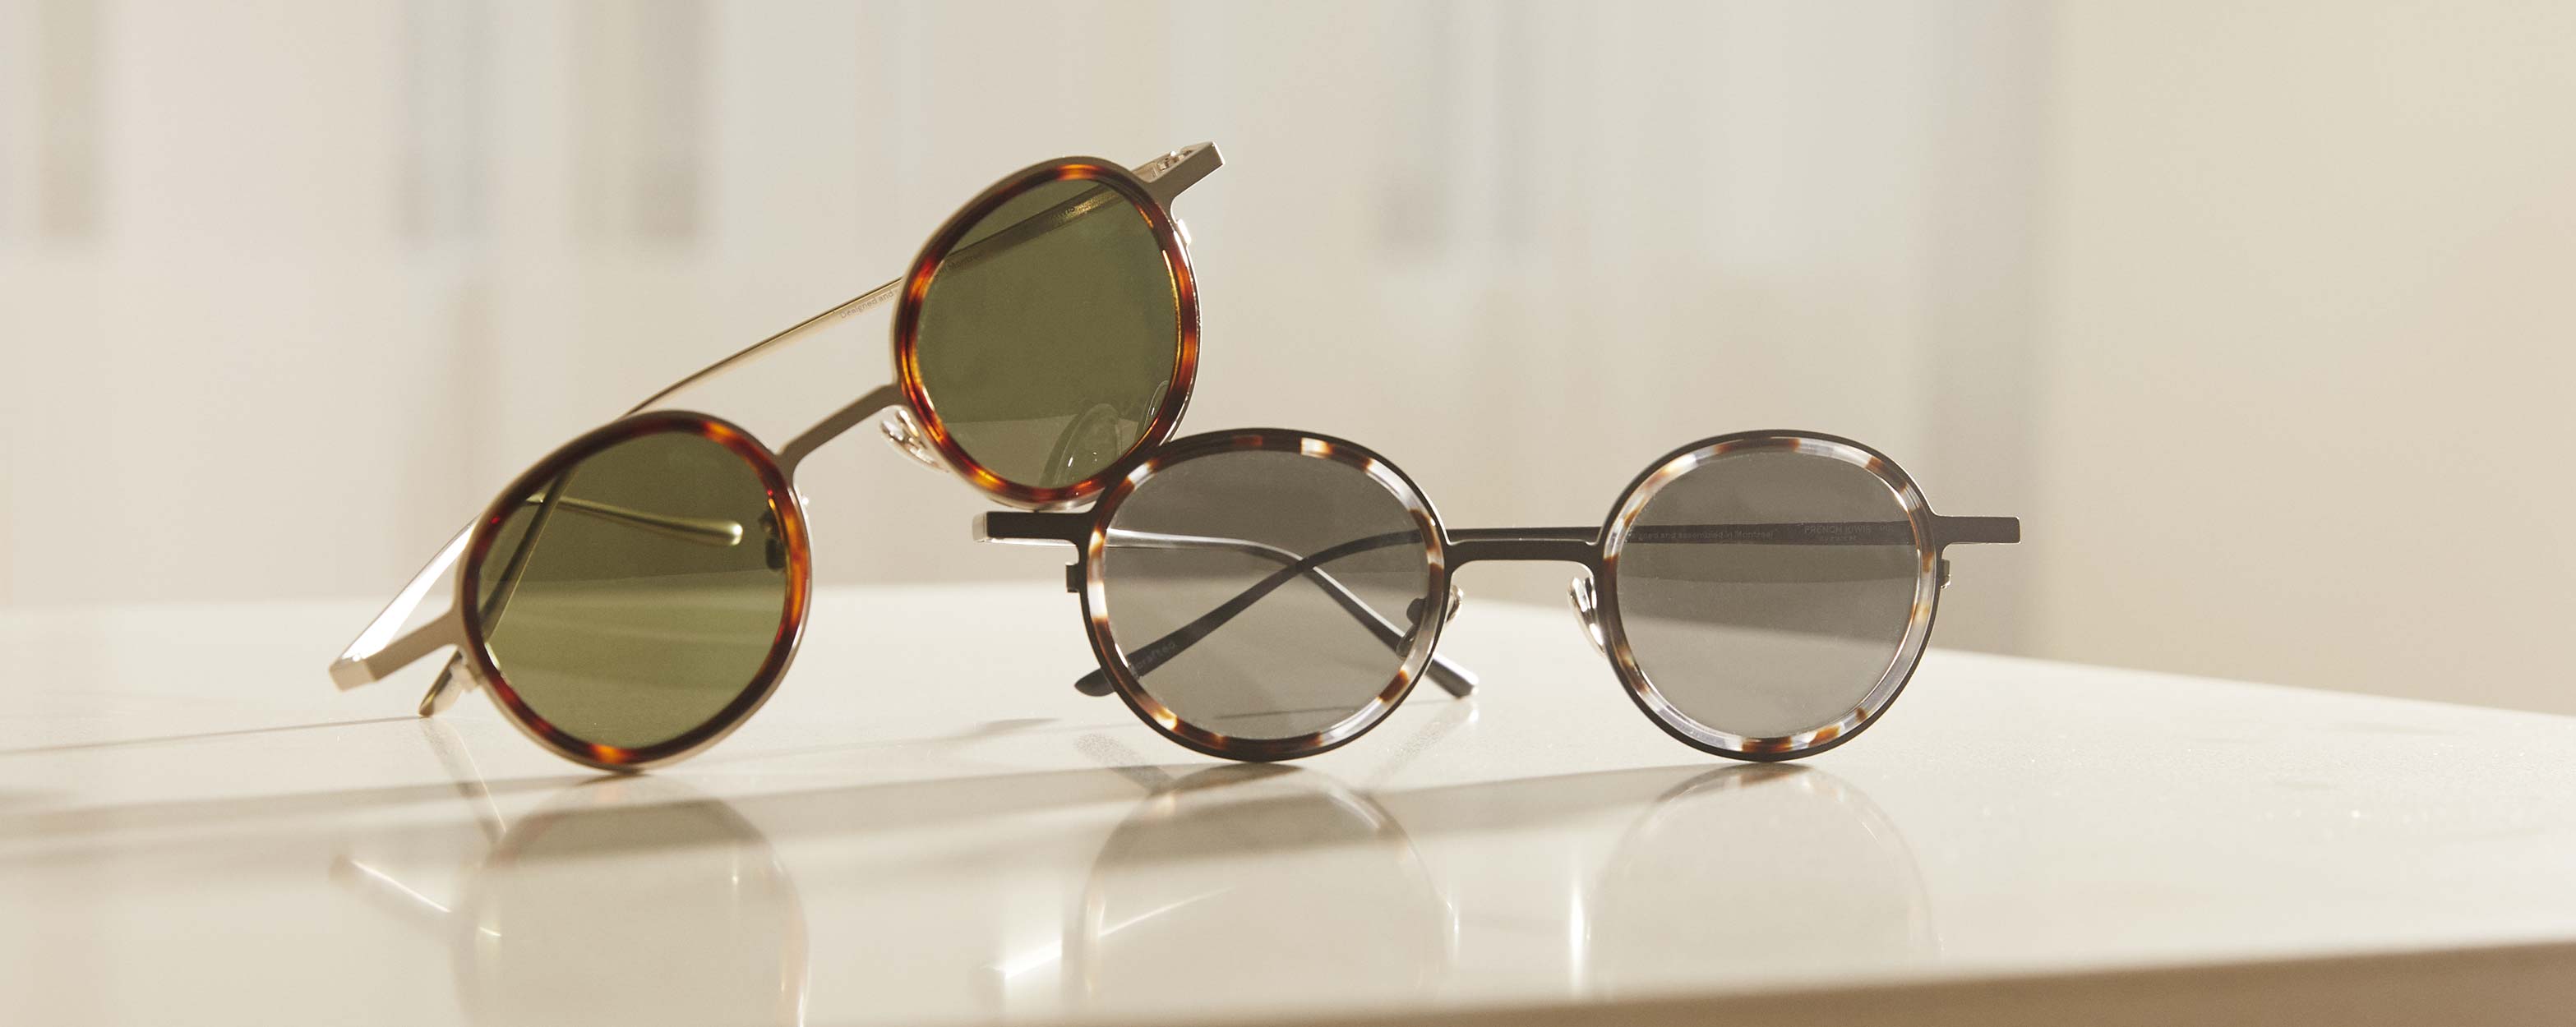 Photo Details of Arthur Sun Onyx & Mat Black Sun Glasses in a room